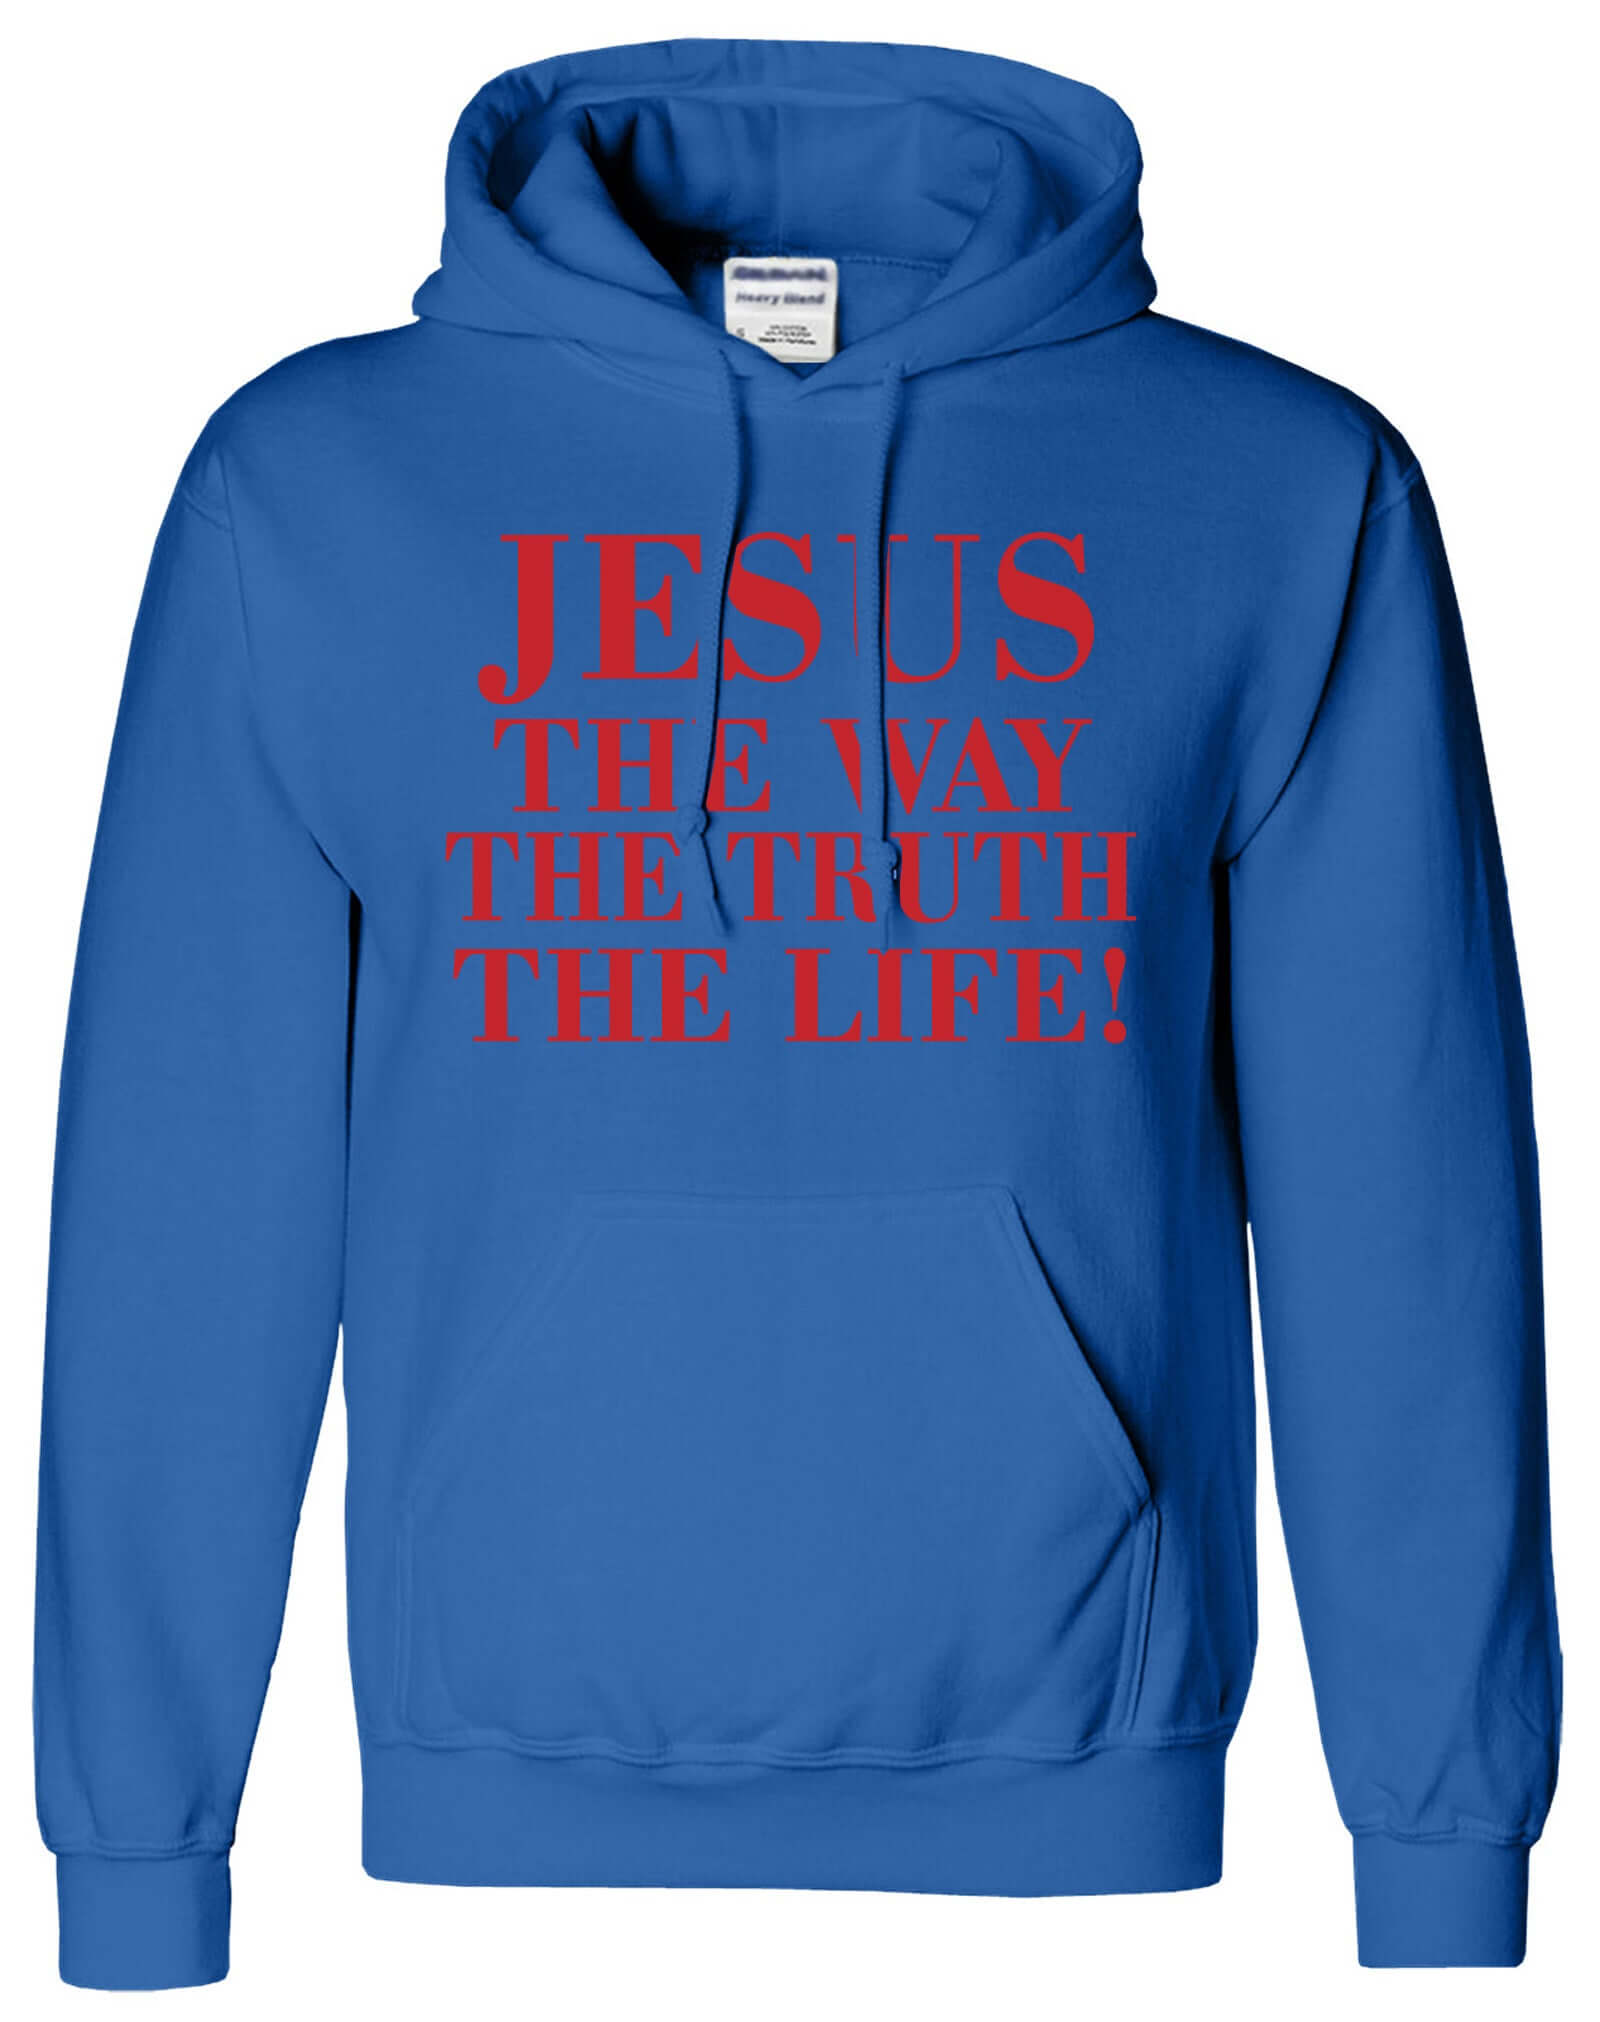 Jesus Way Truth Life Printed Logo Unisex Hoodie - ApparelinClick